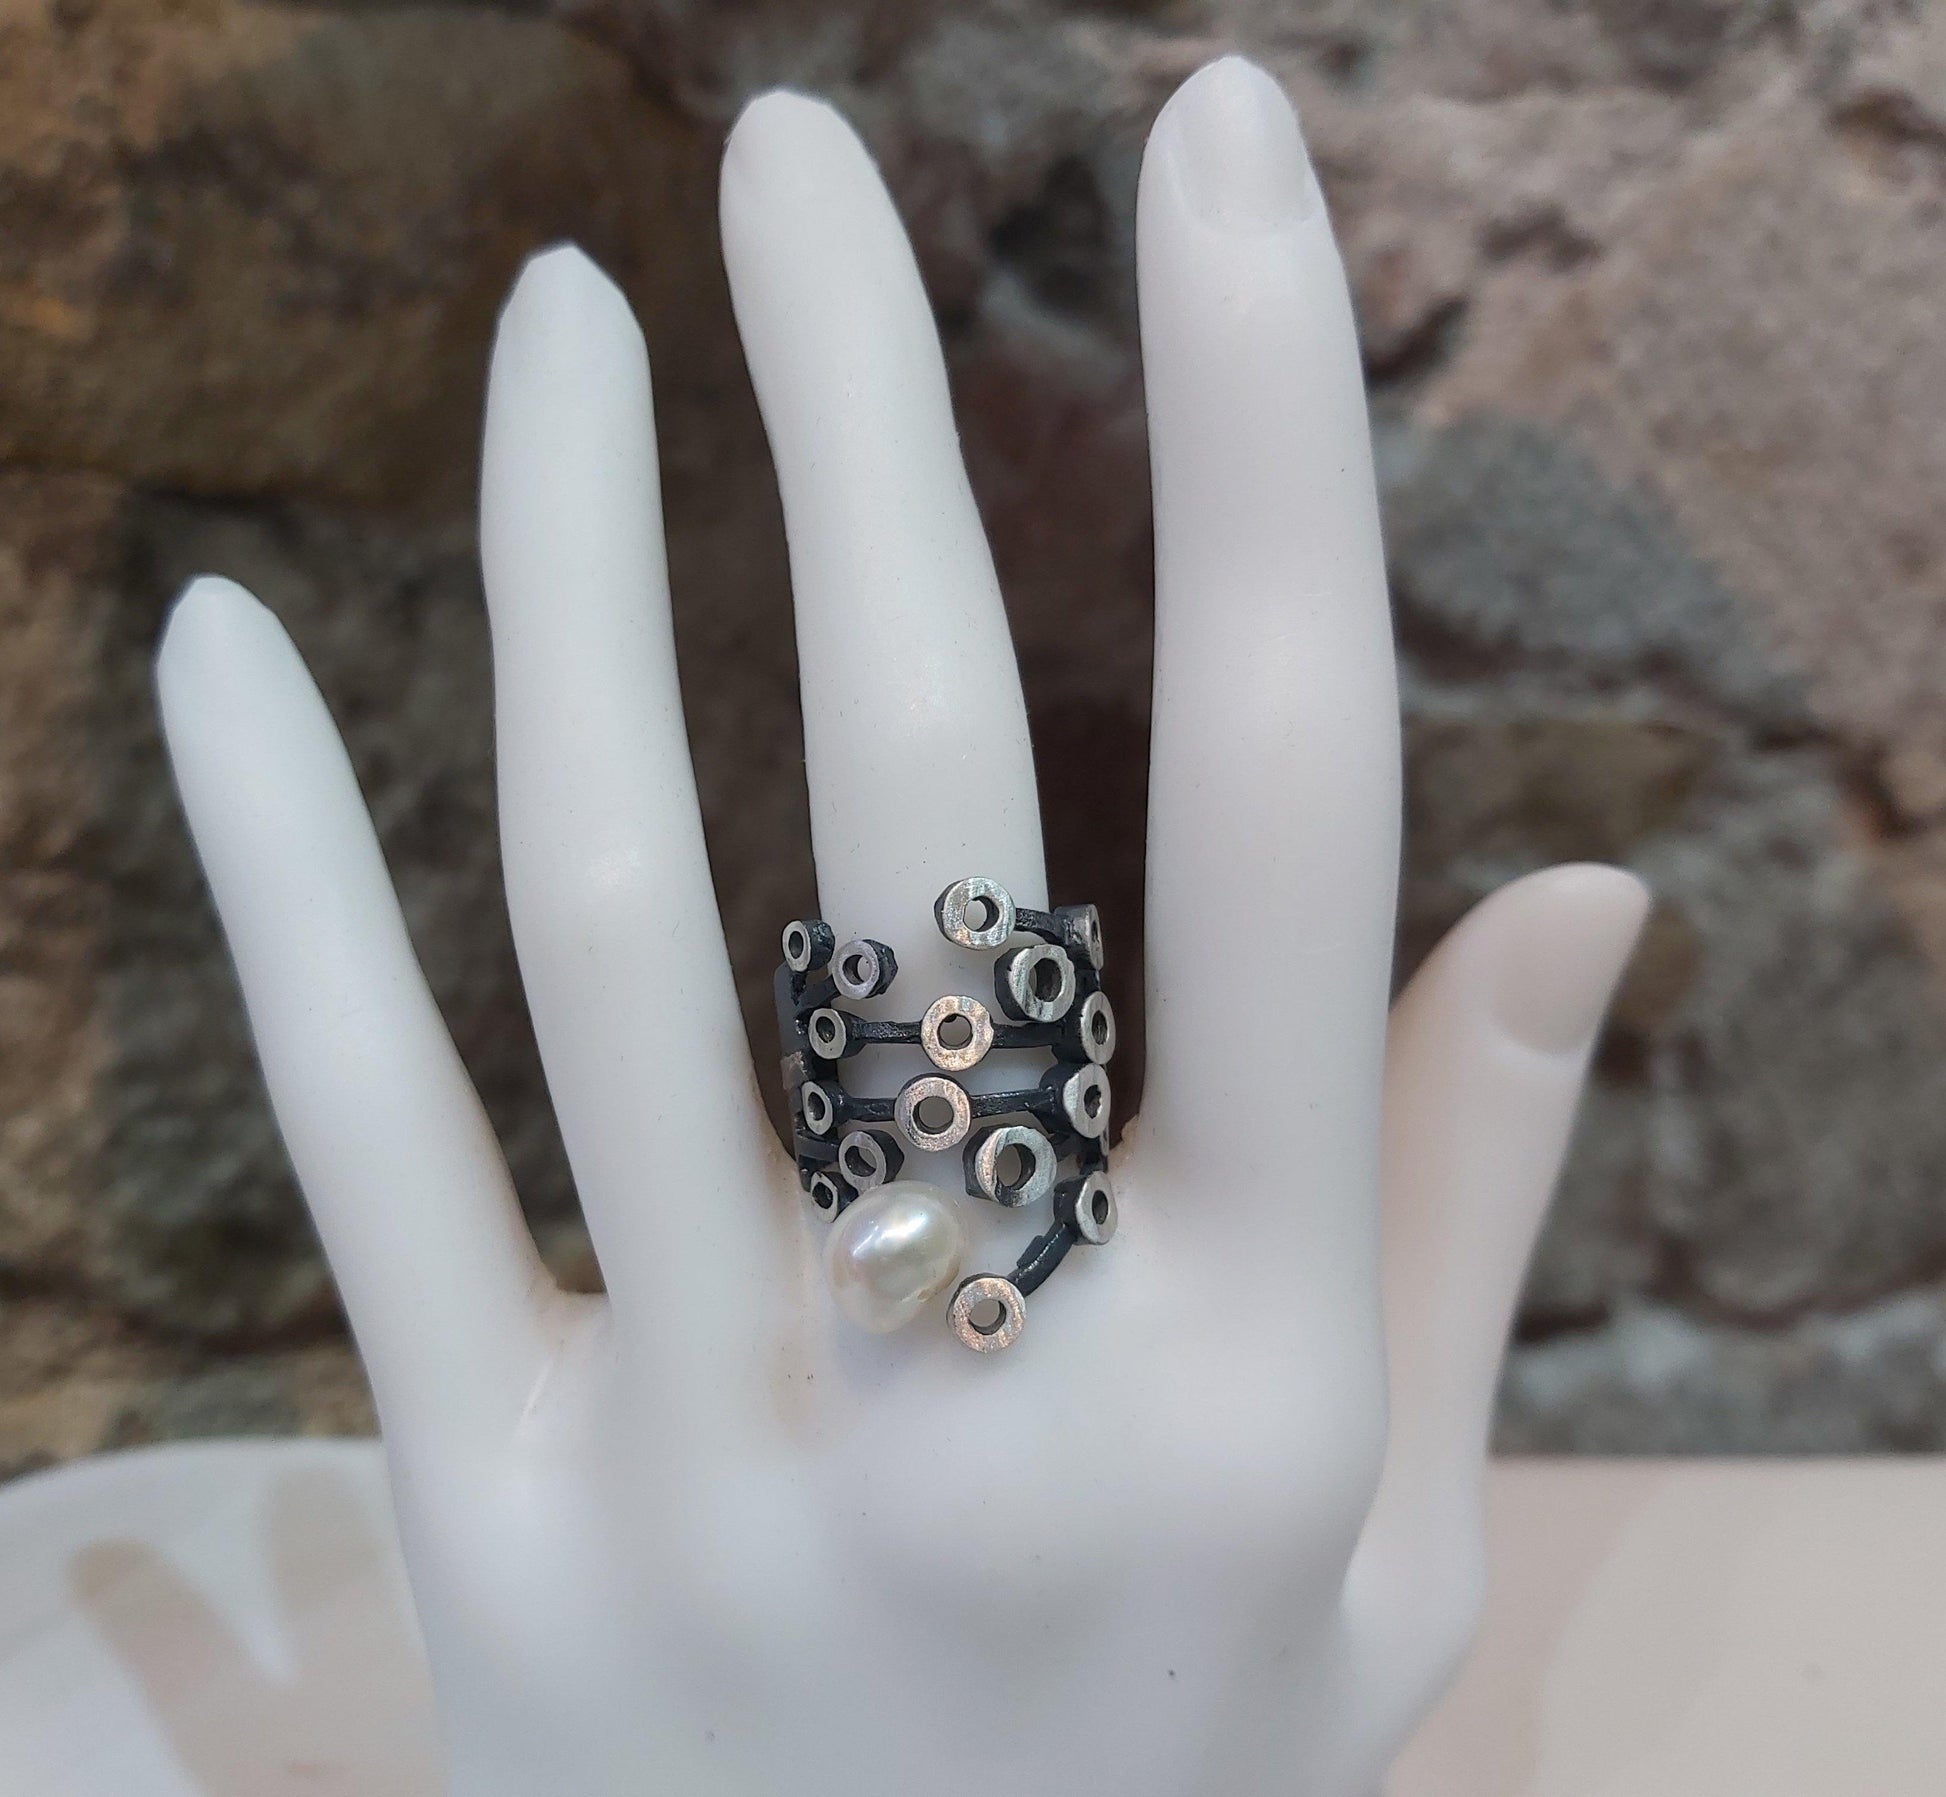 Anillo exclusivo de plata con perla cultivada, hecho a mano por Amparo Valencia. Joyería artesanal en Barcelona